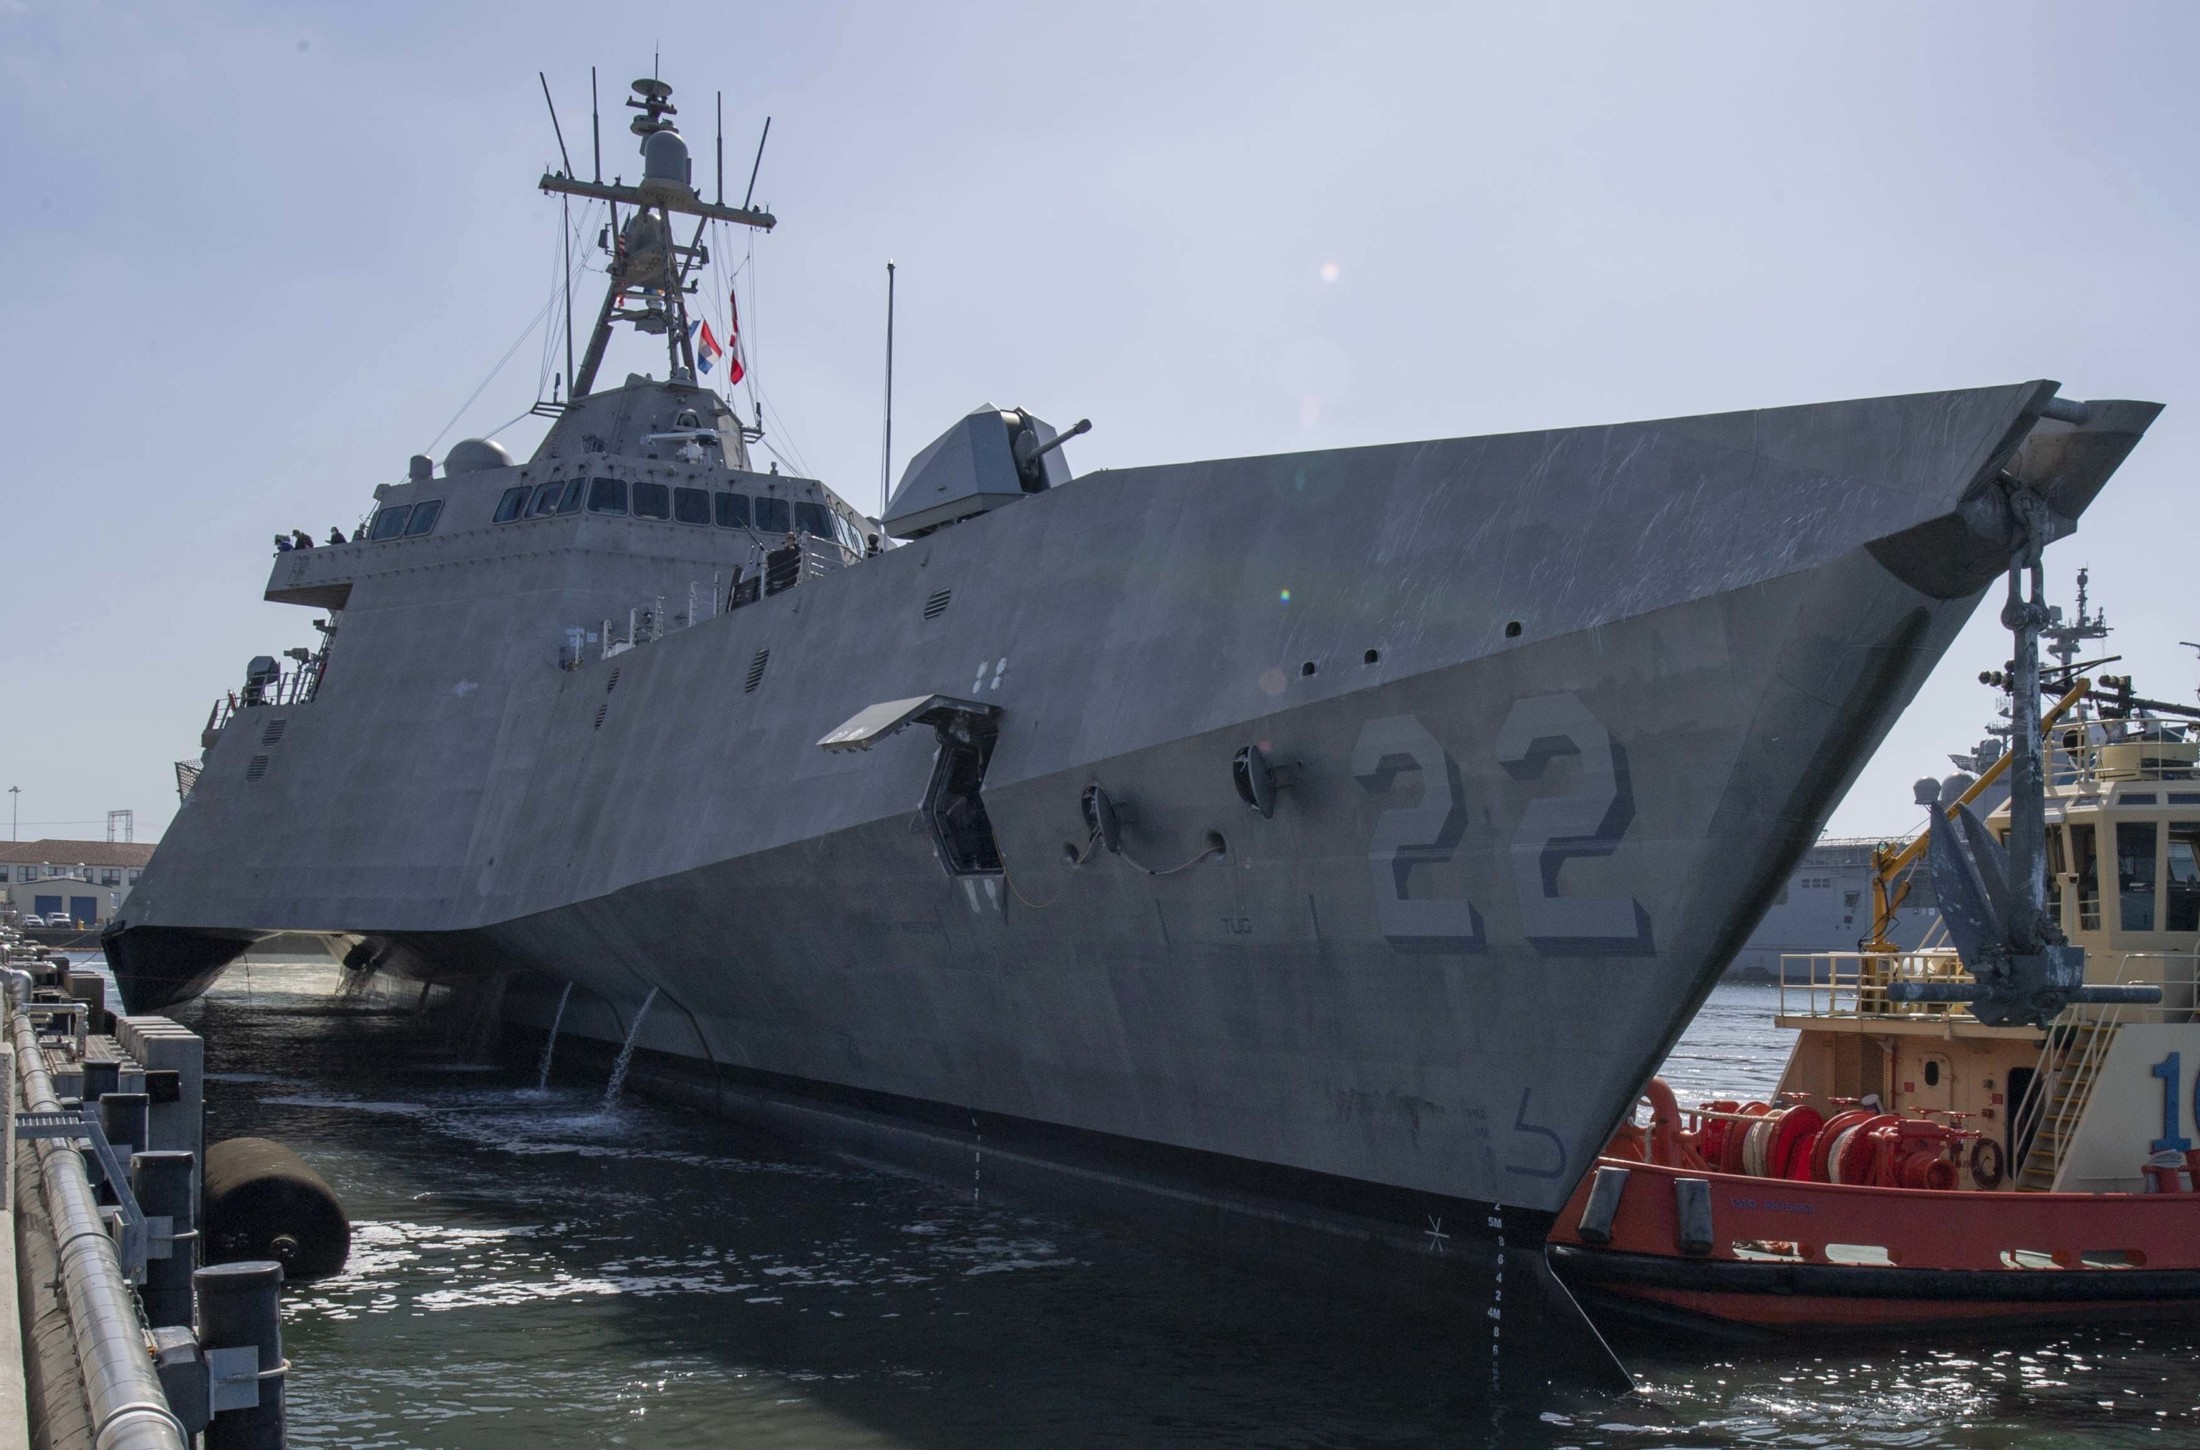 lcs-22 uss kansas city independence class littoral combat ship us navy 08 naval base san diego california